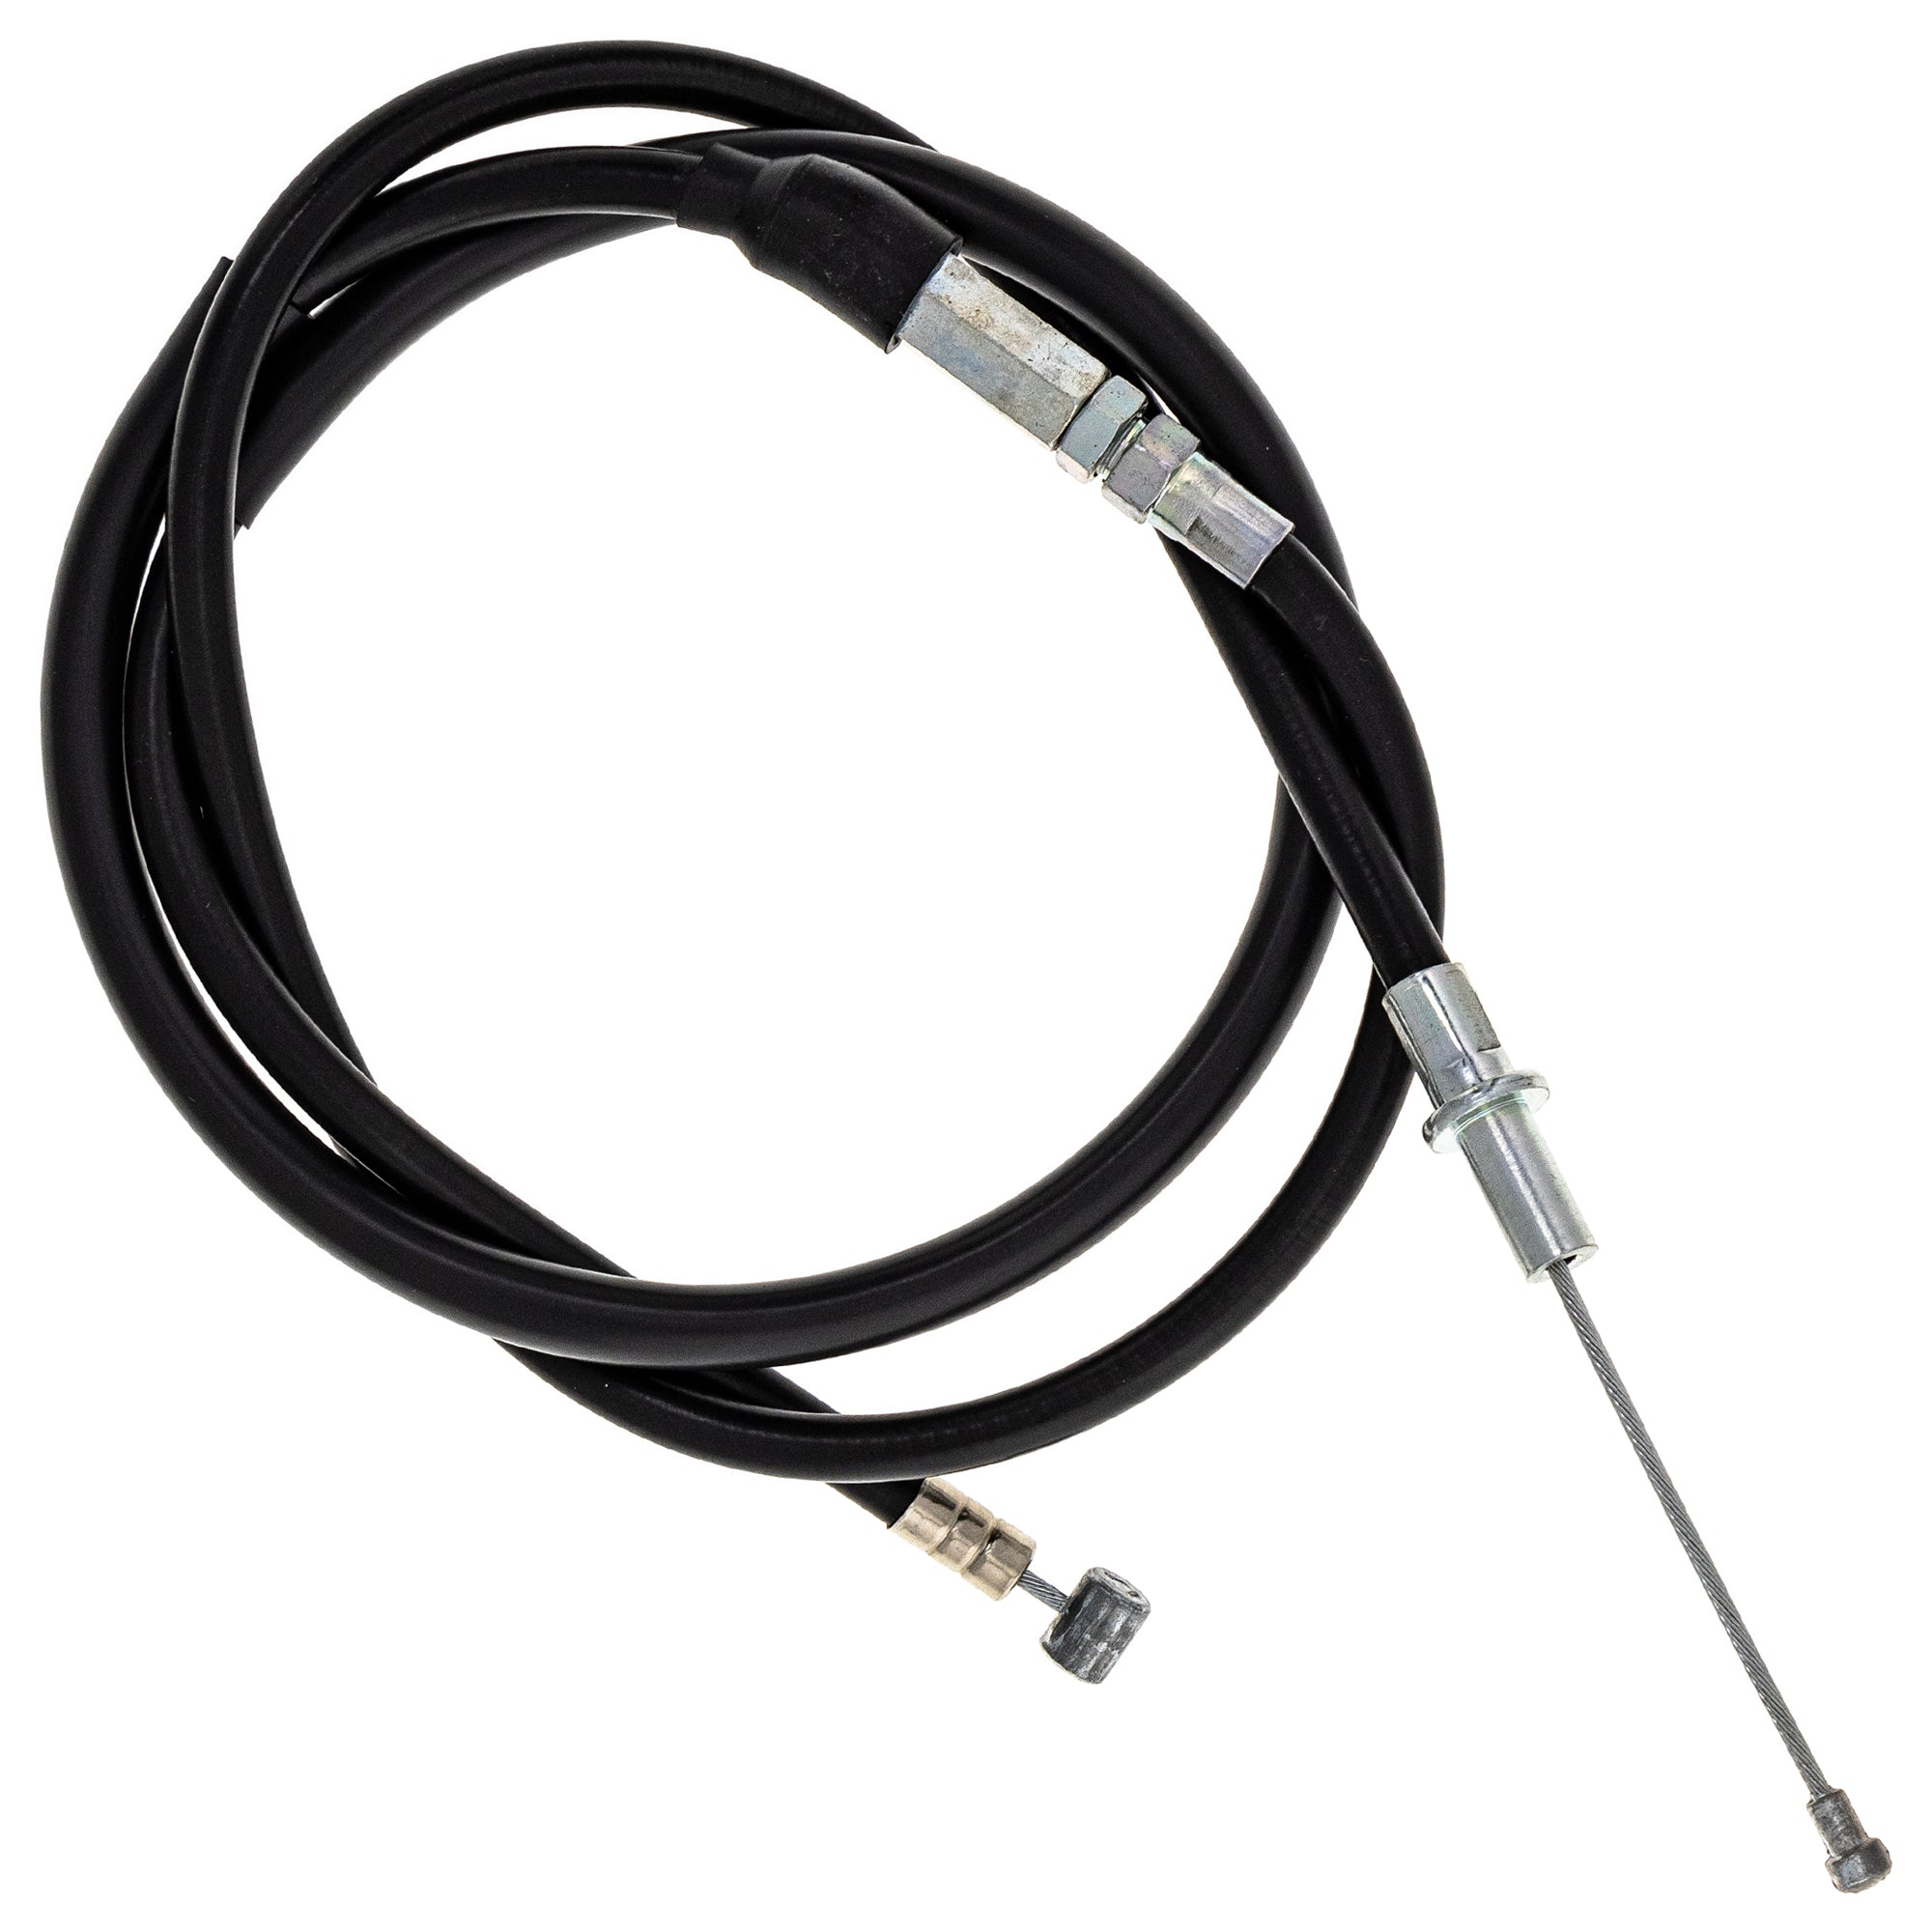 Clutch Cable for zOTHER KZ440B KZ400S KZ400D KZ400C NICHE 519-CCB2593L